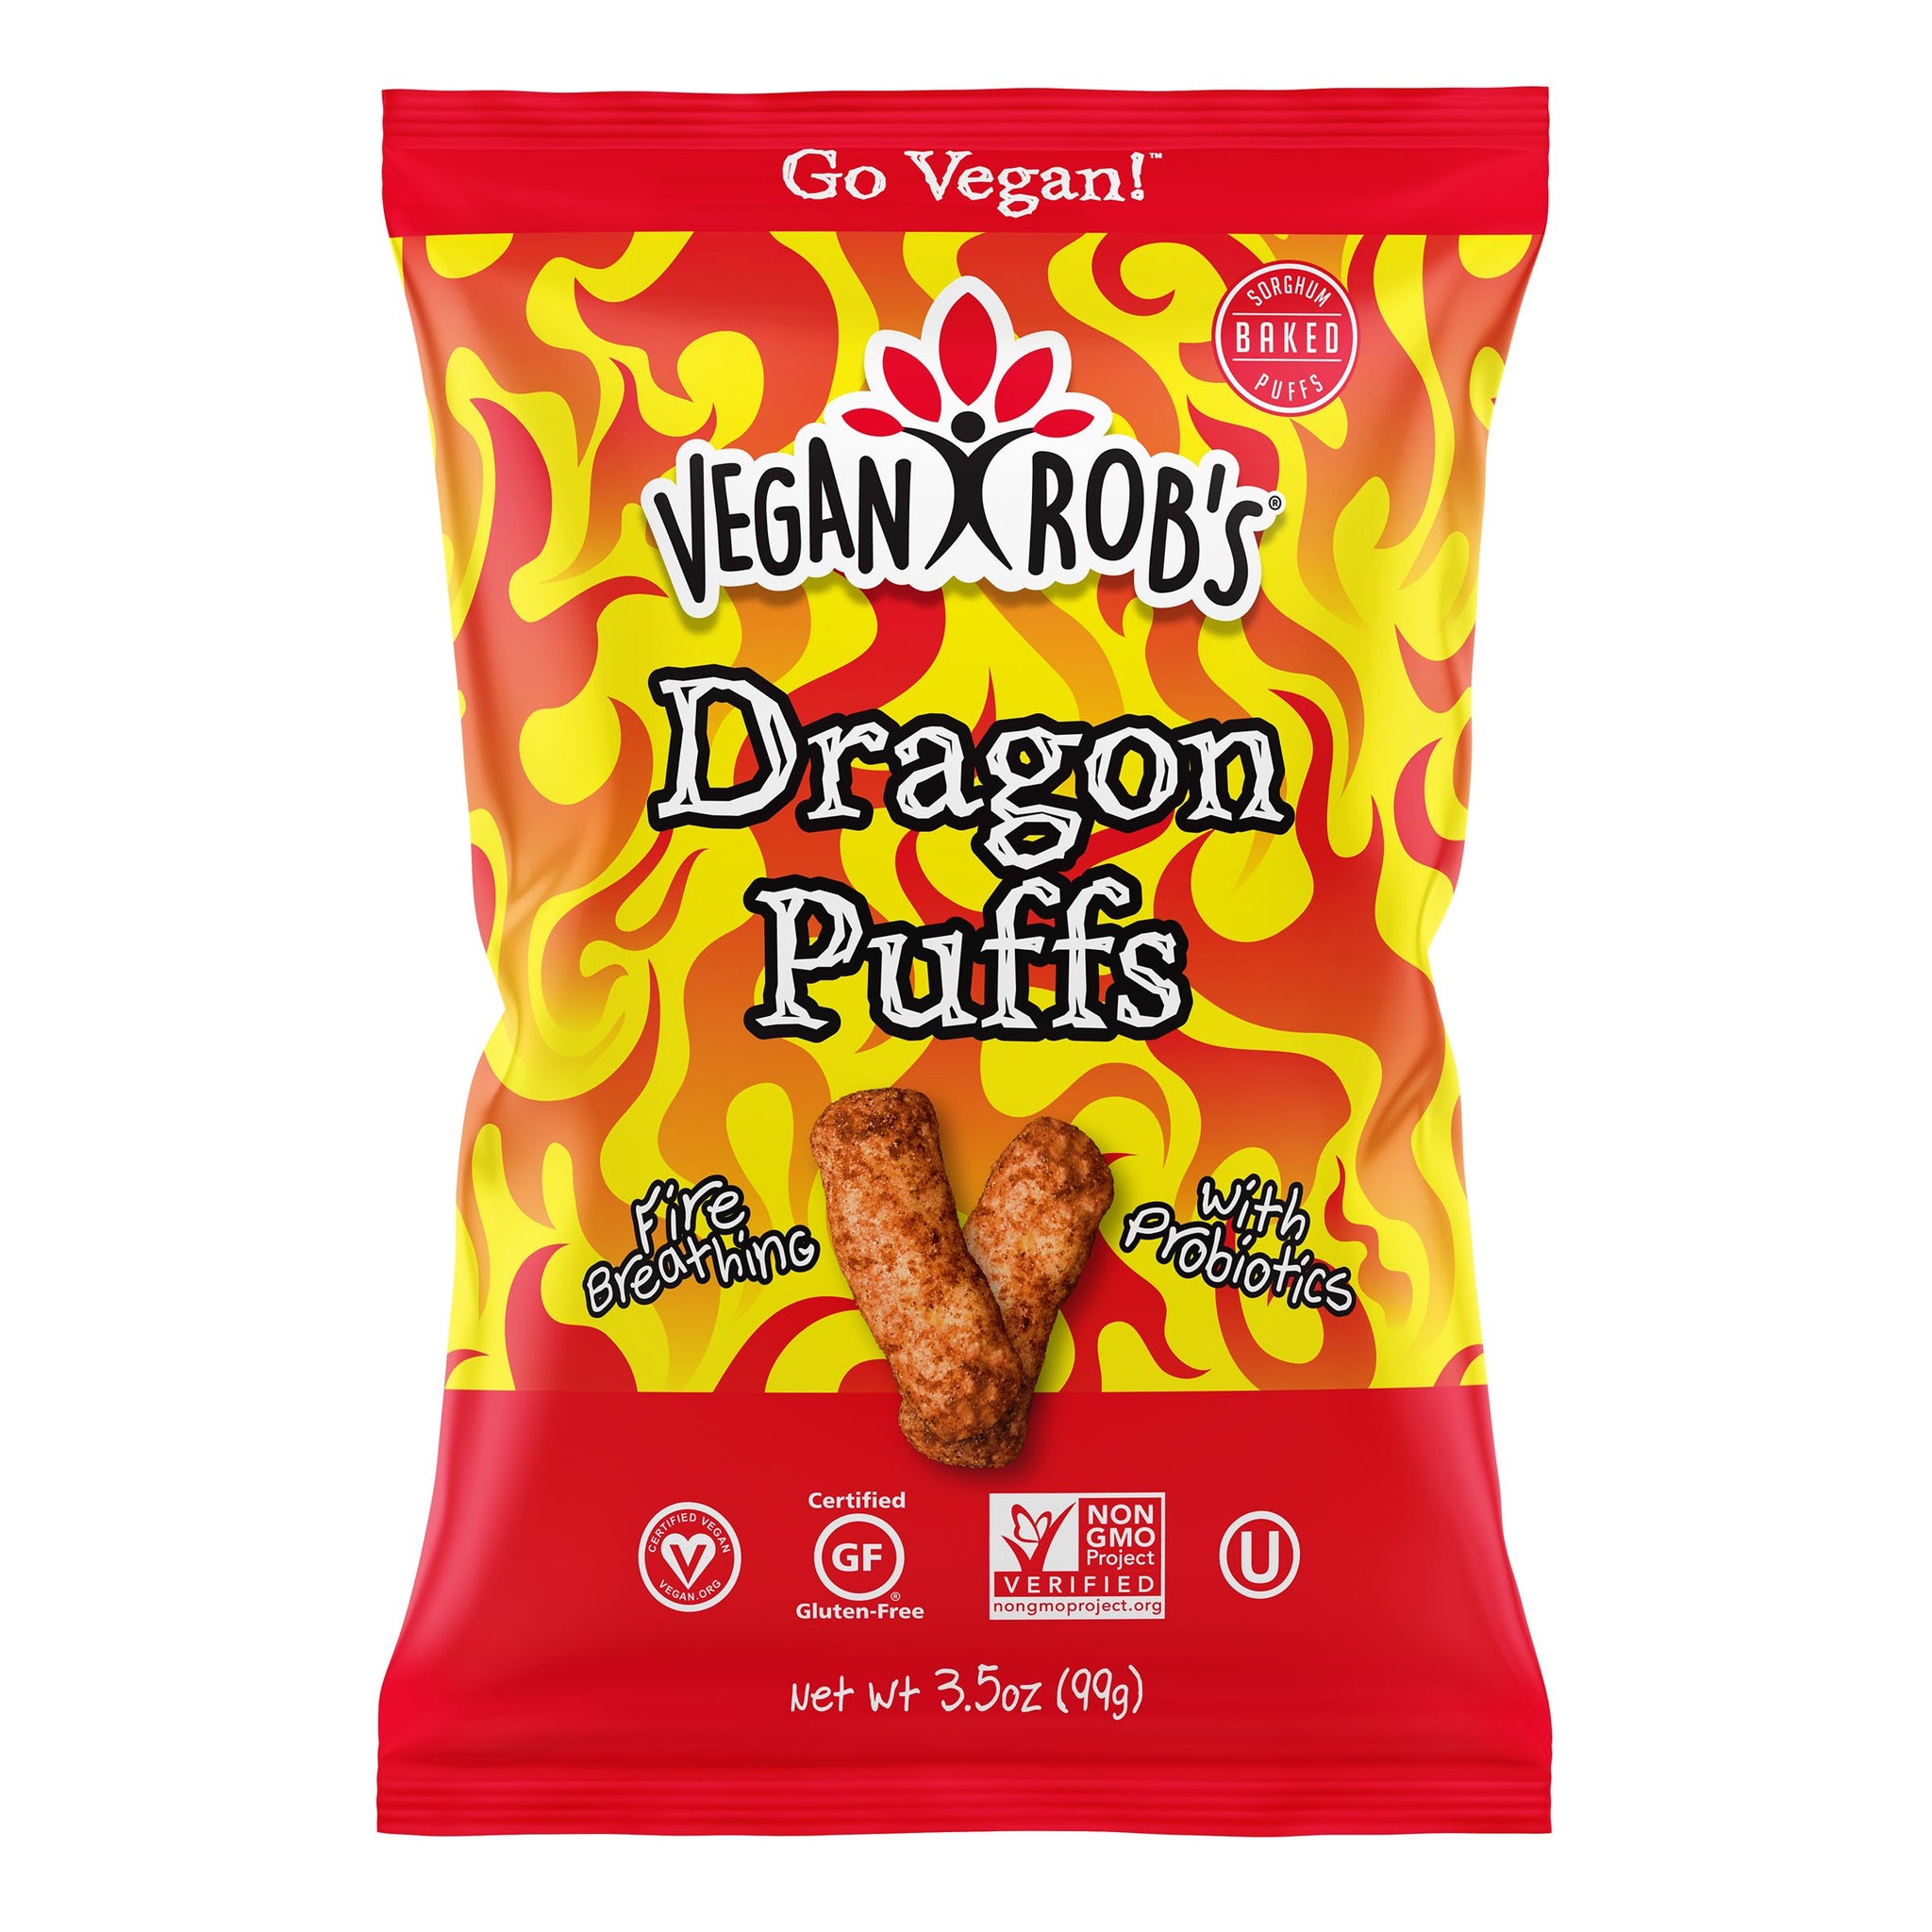 Vegan Rob's Probiotic Spicy Dragon Puffs